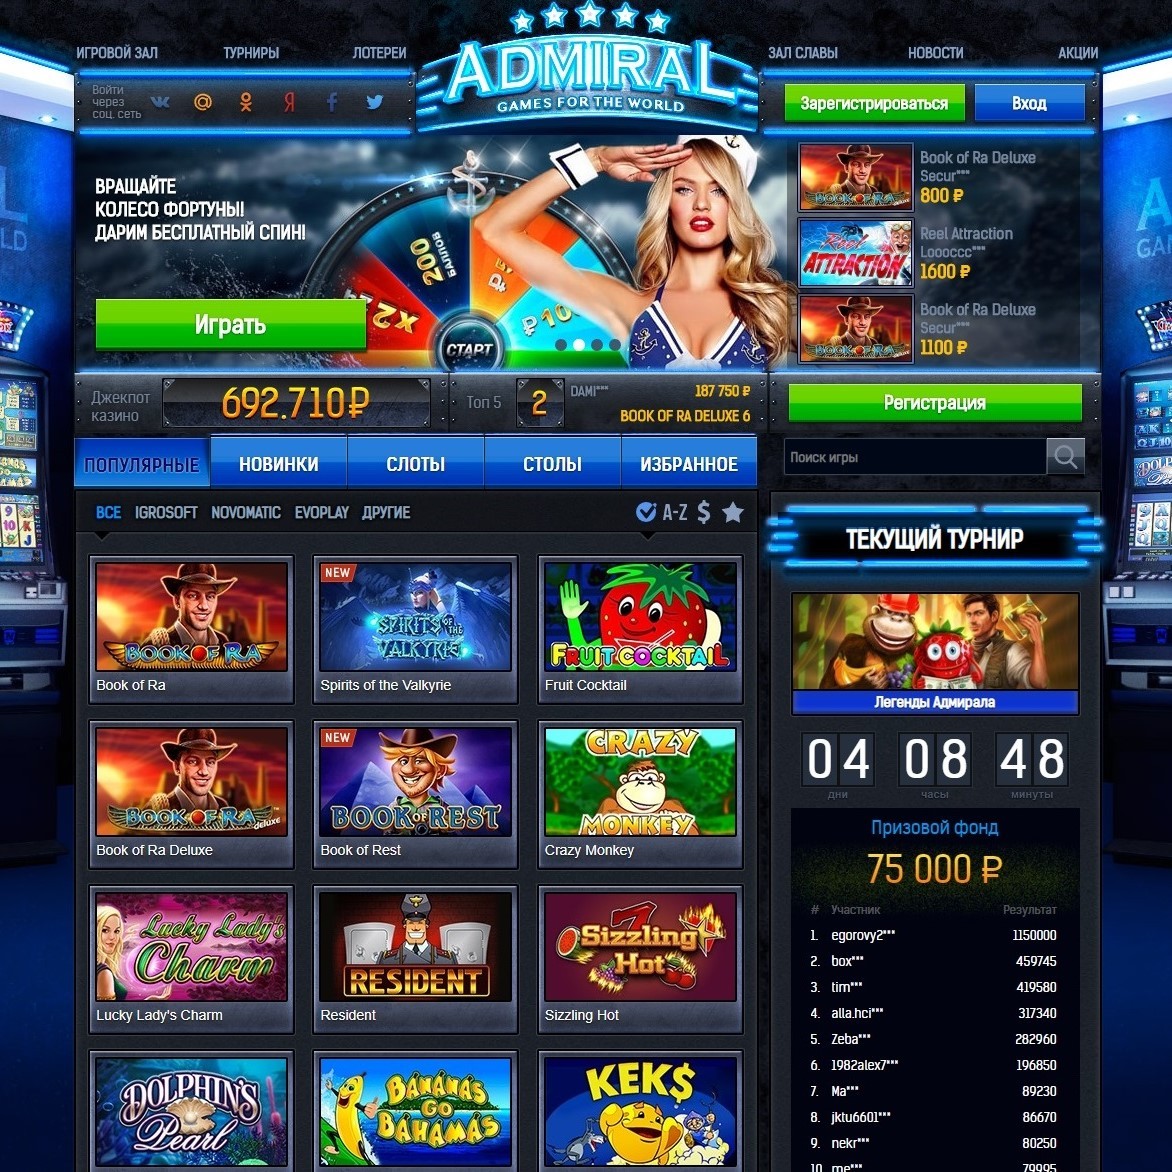 New online casino no deposit bonus